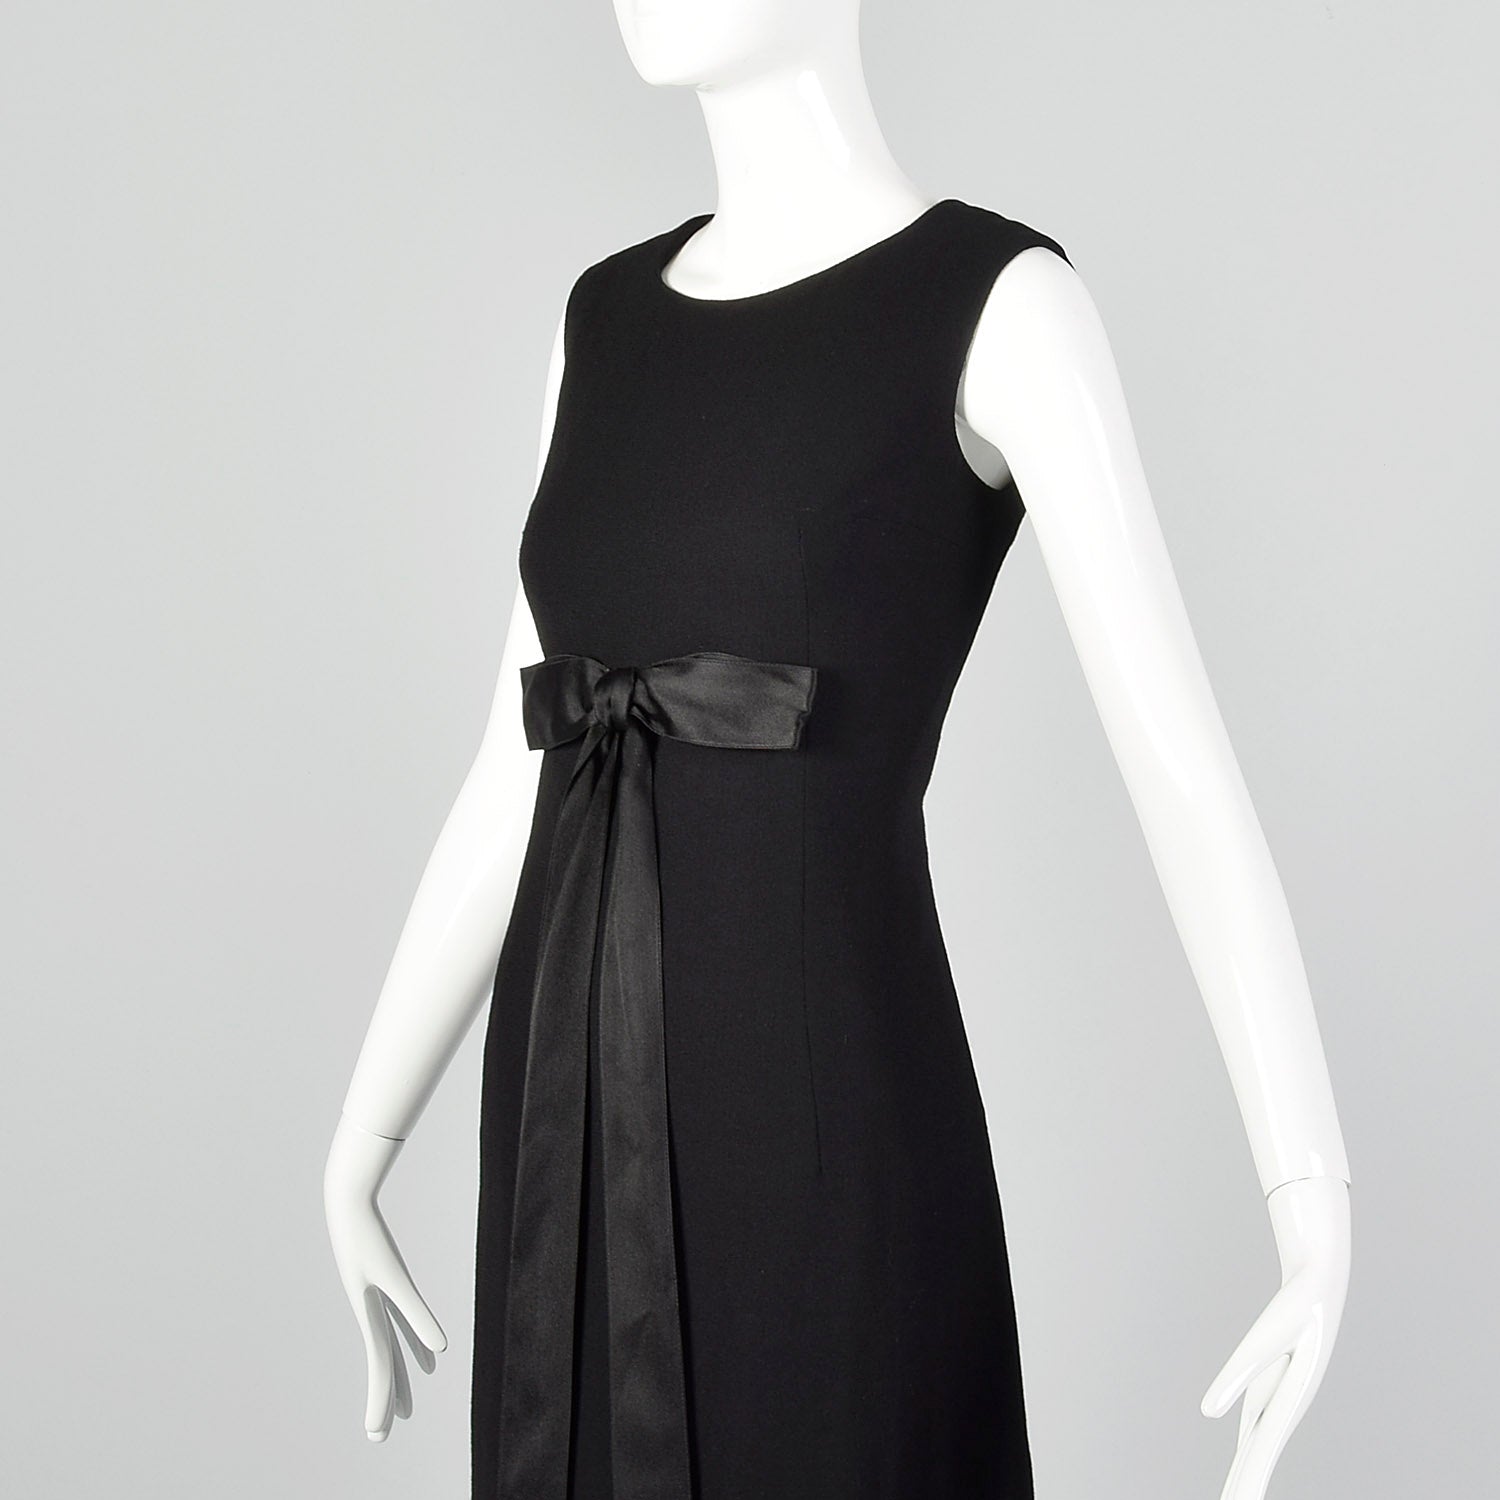 Small Christian Dior Marc Bohan 1960s Dress